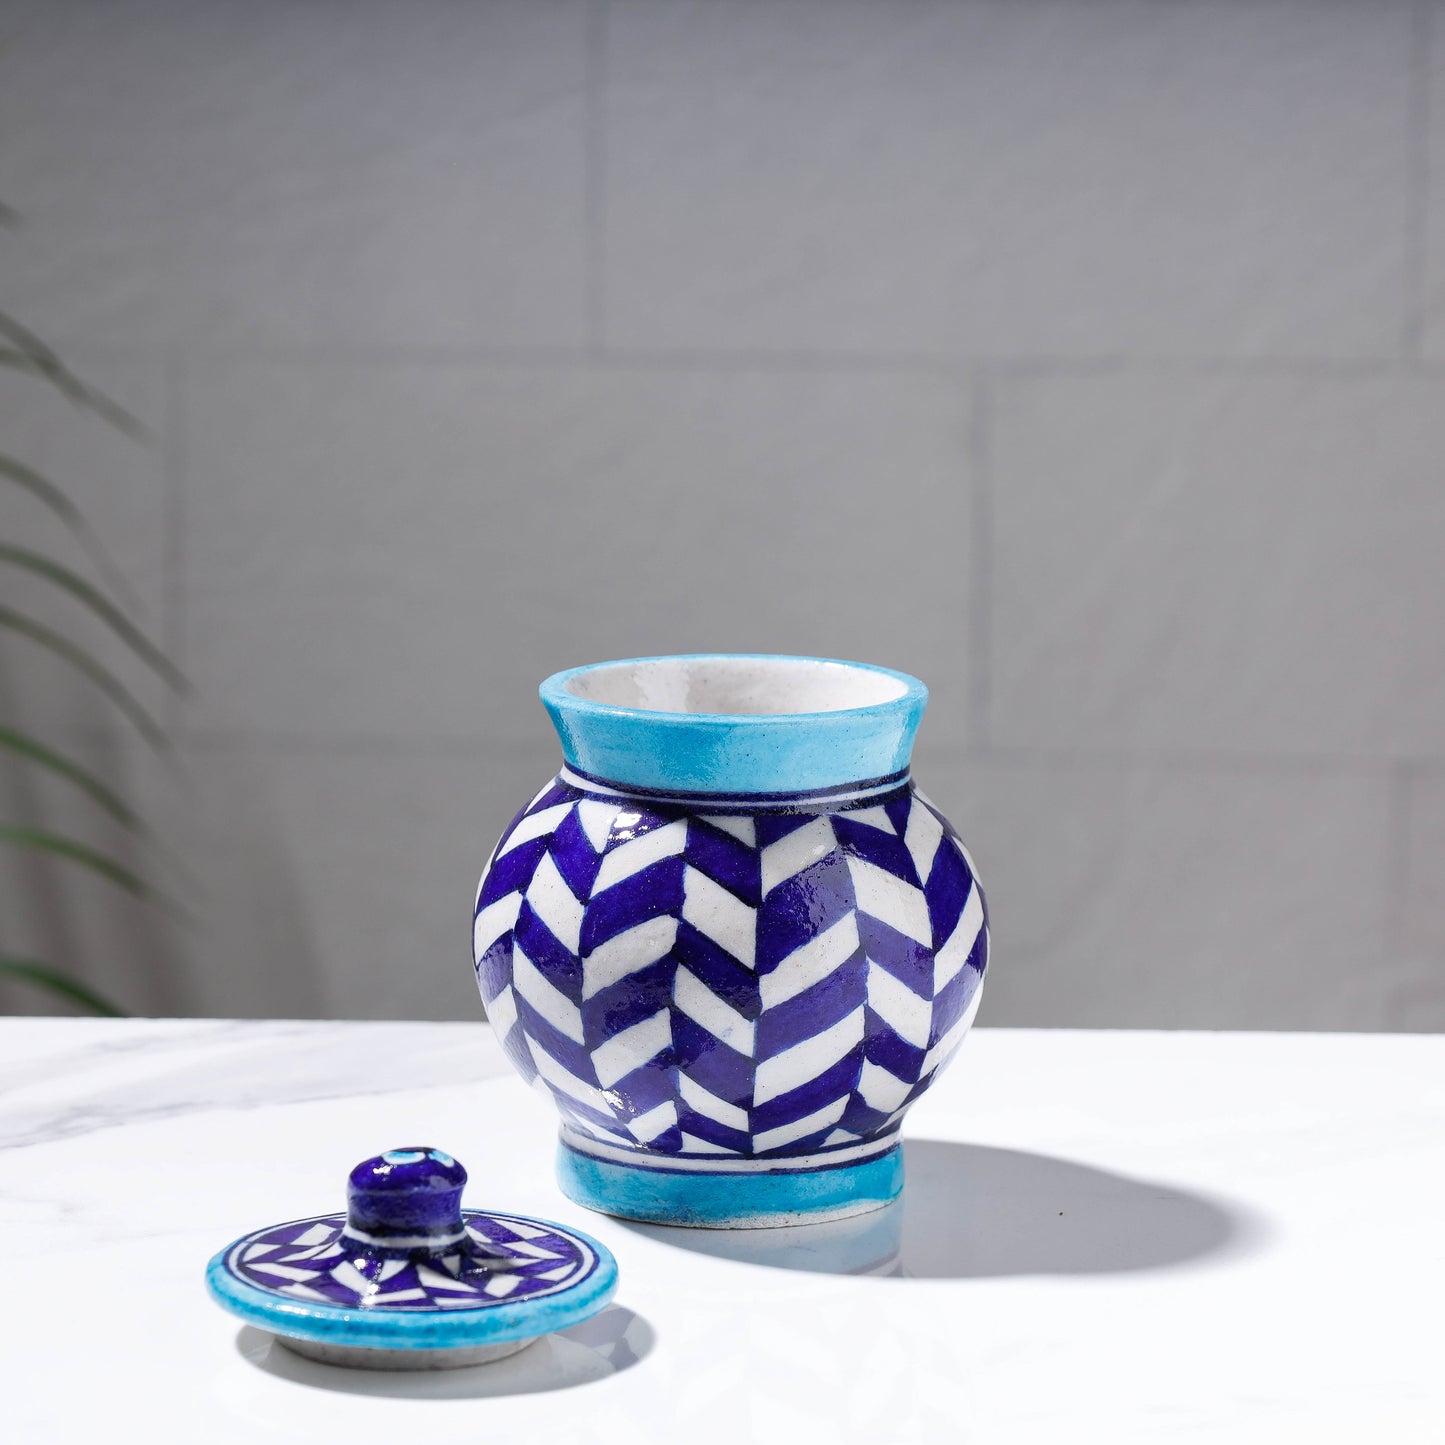 Original Blue Pottery Ceramic Barni/Storage Jar with Lid (Small)